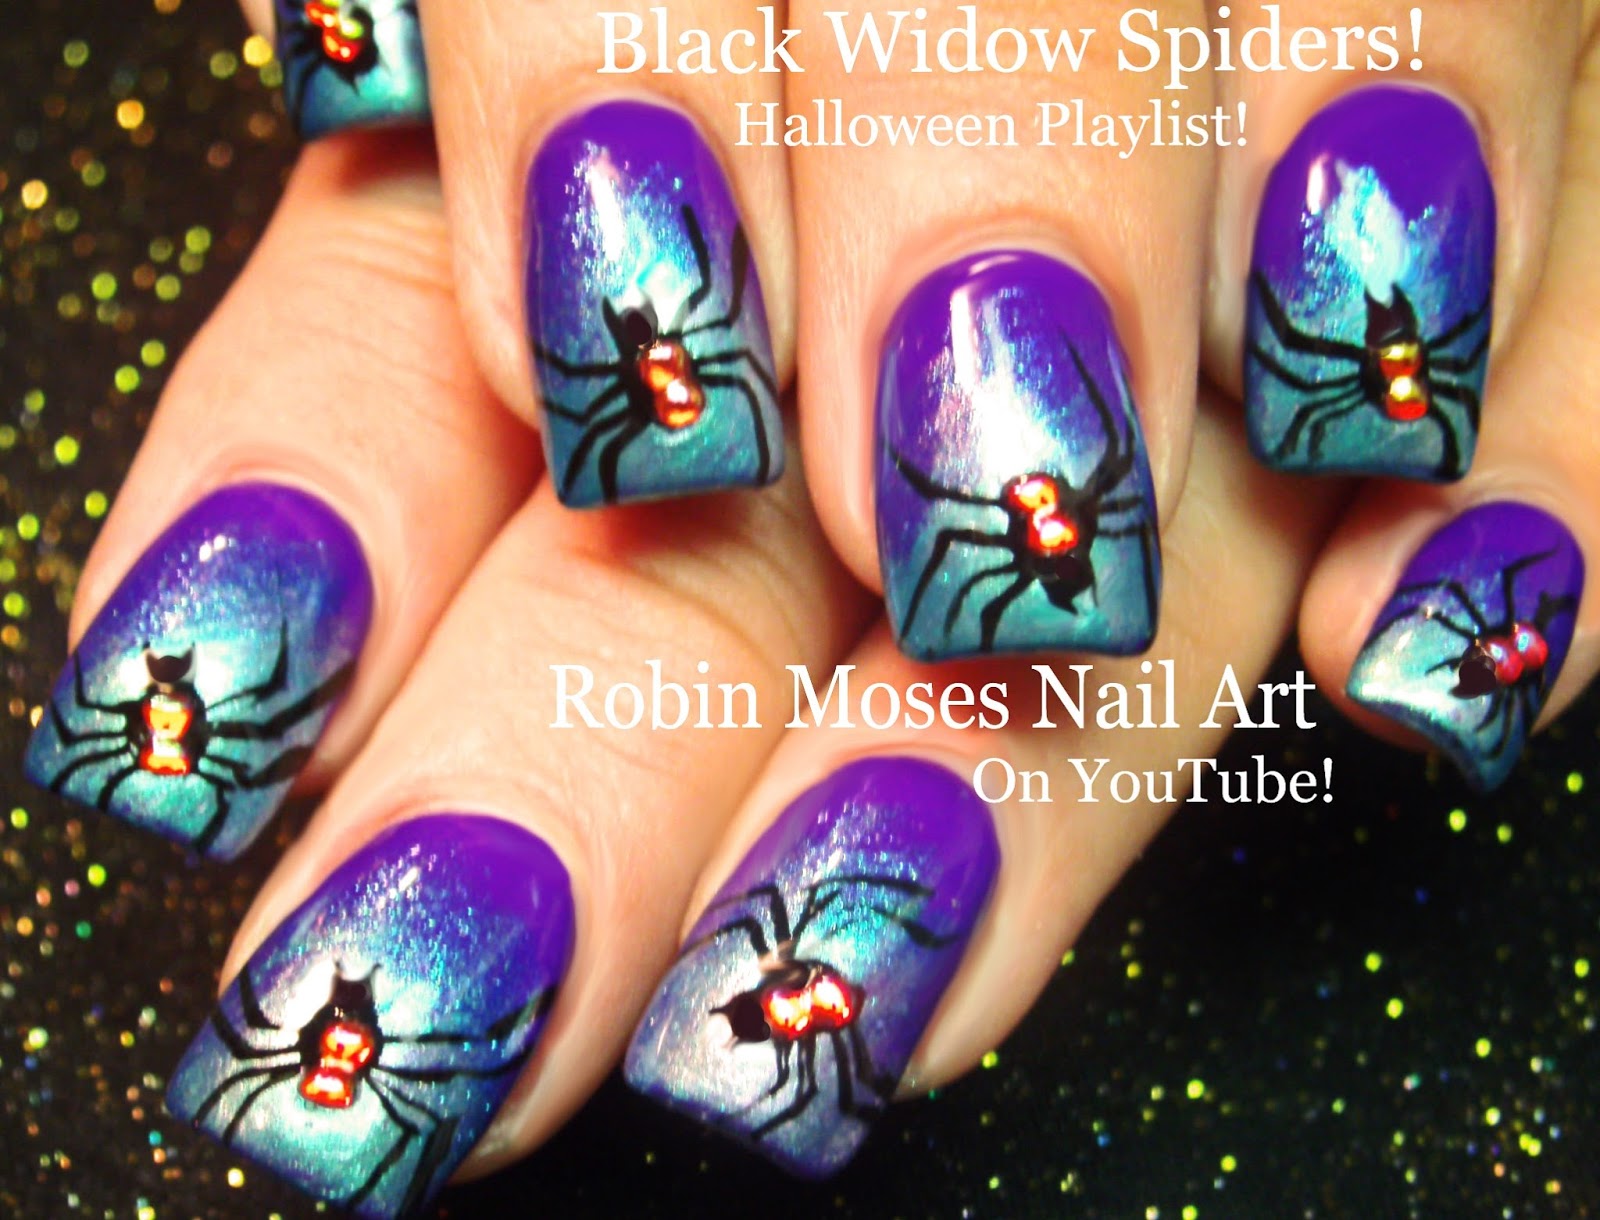 8. Neon Halloween Nail Designs with Spiderwebs - wide 2